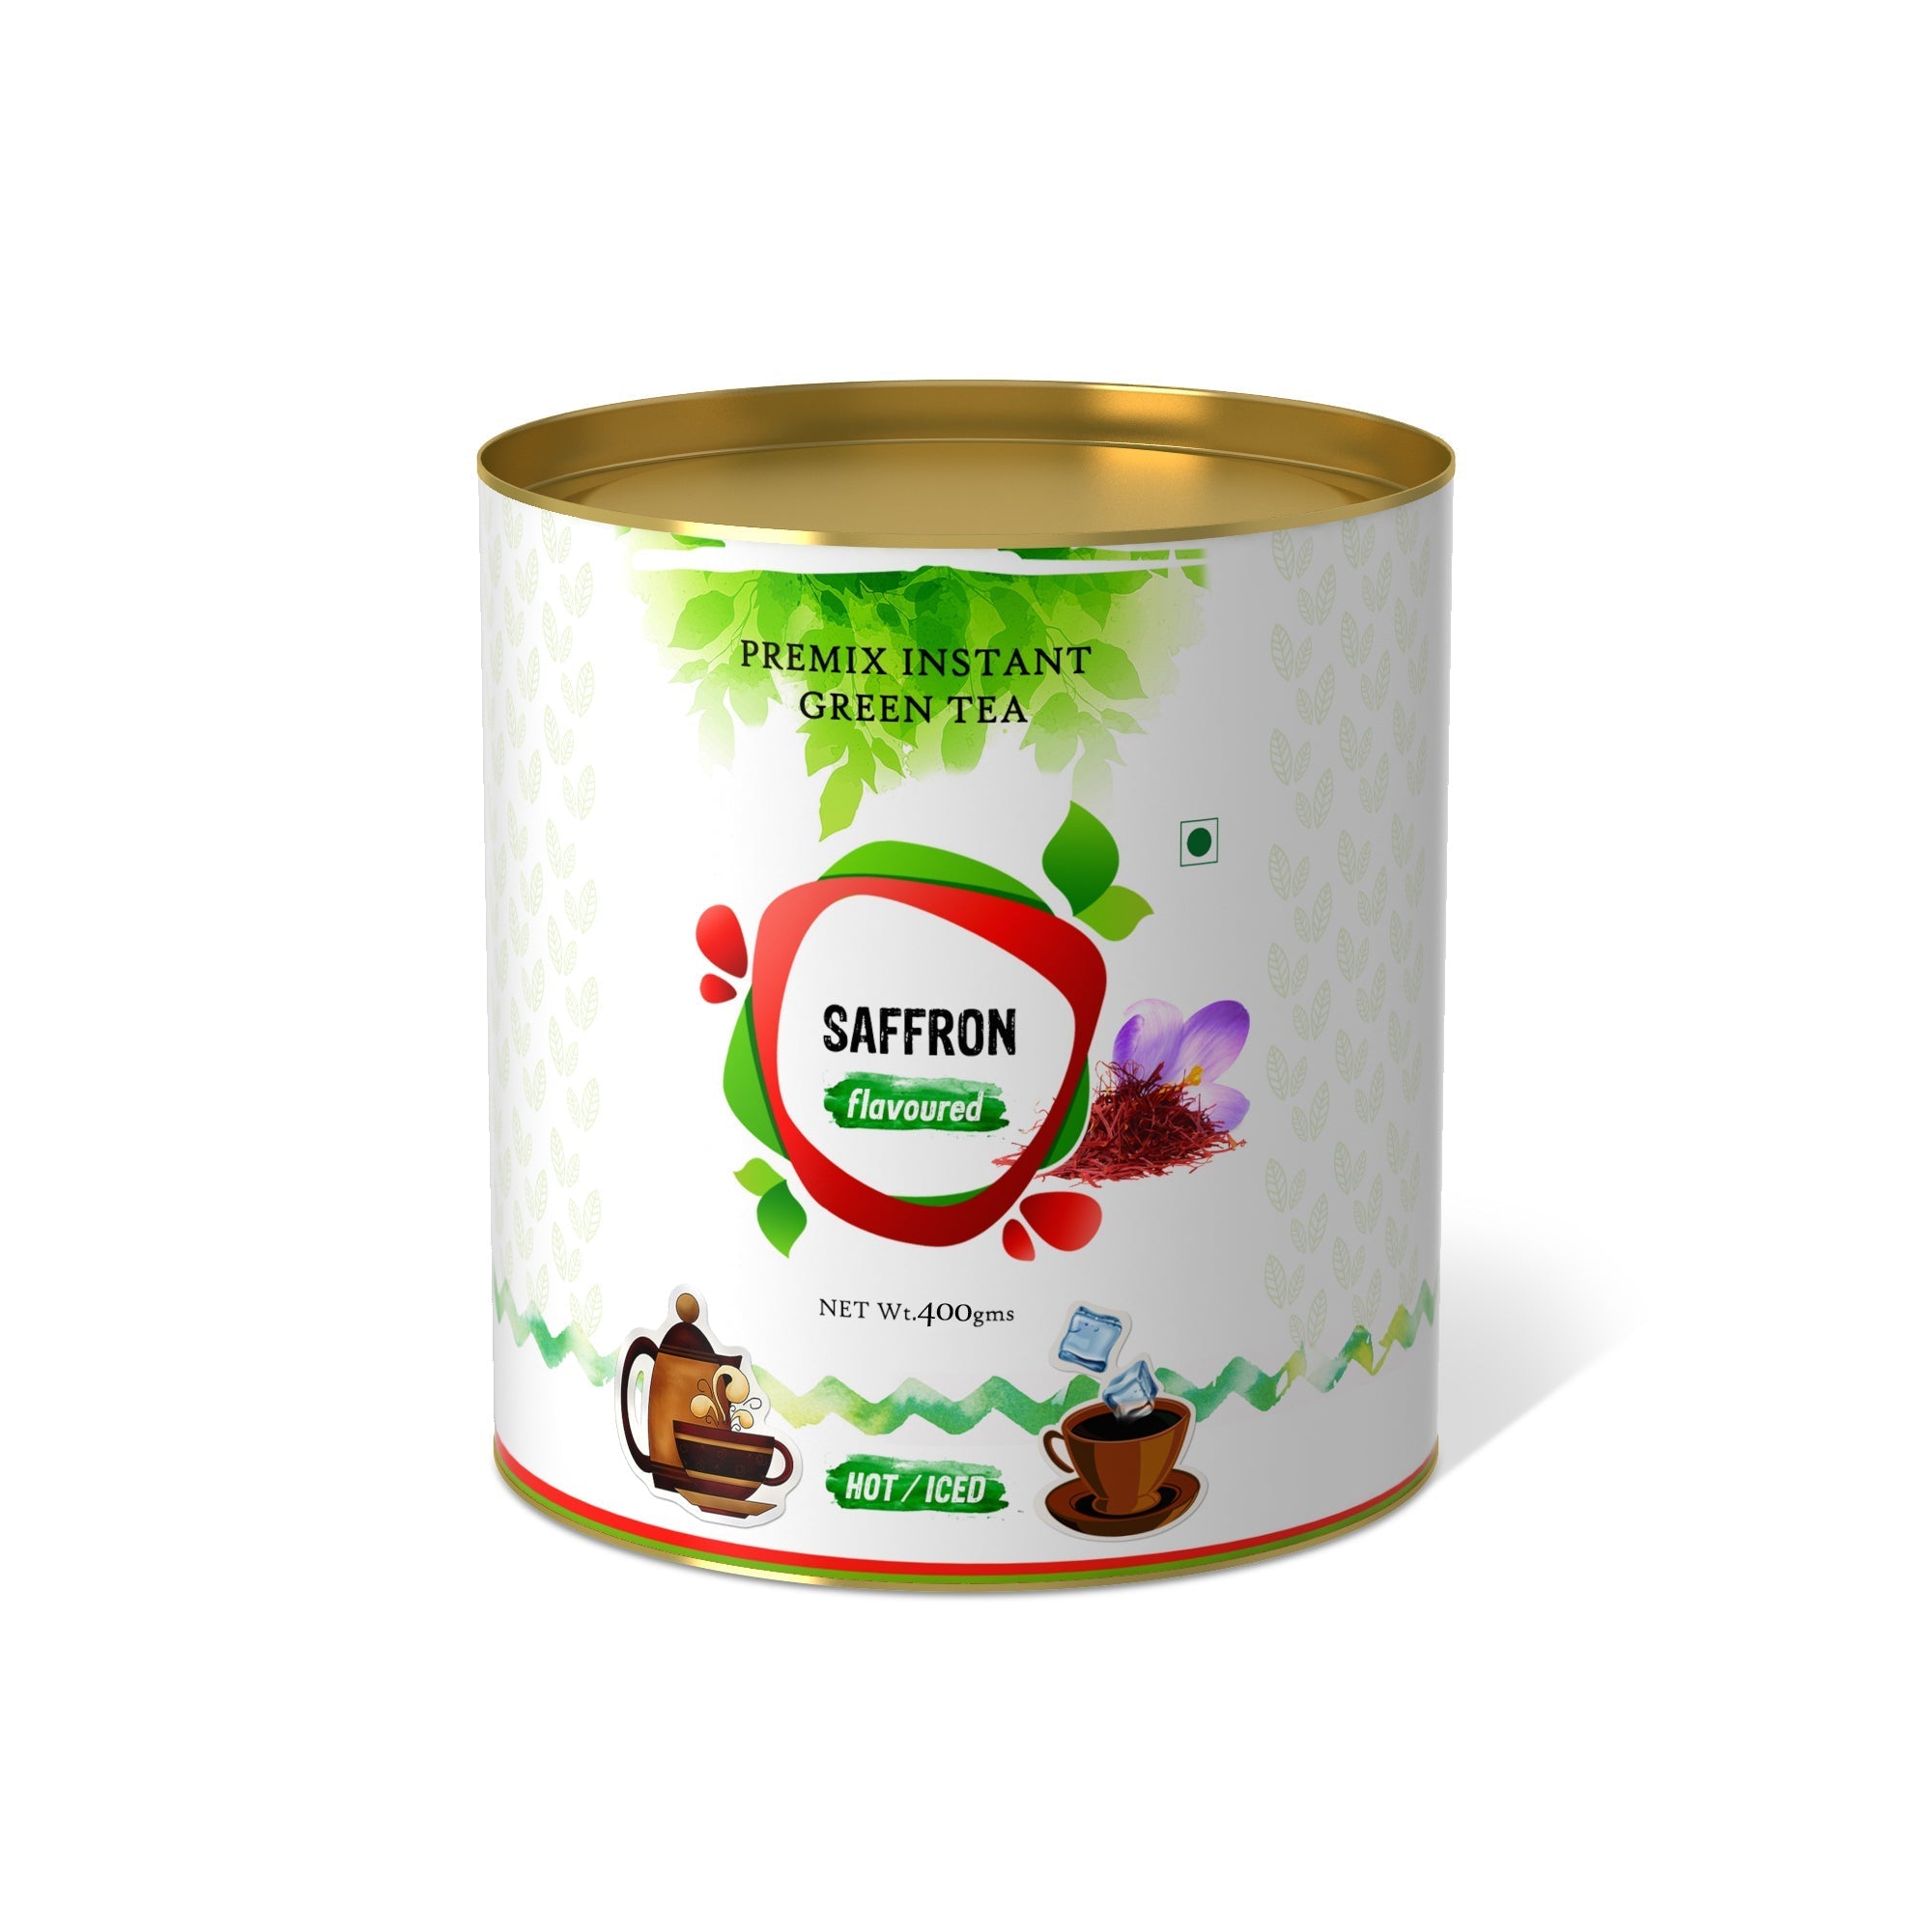 Saffron Flavored Instant Green Tea - 800 gms